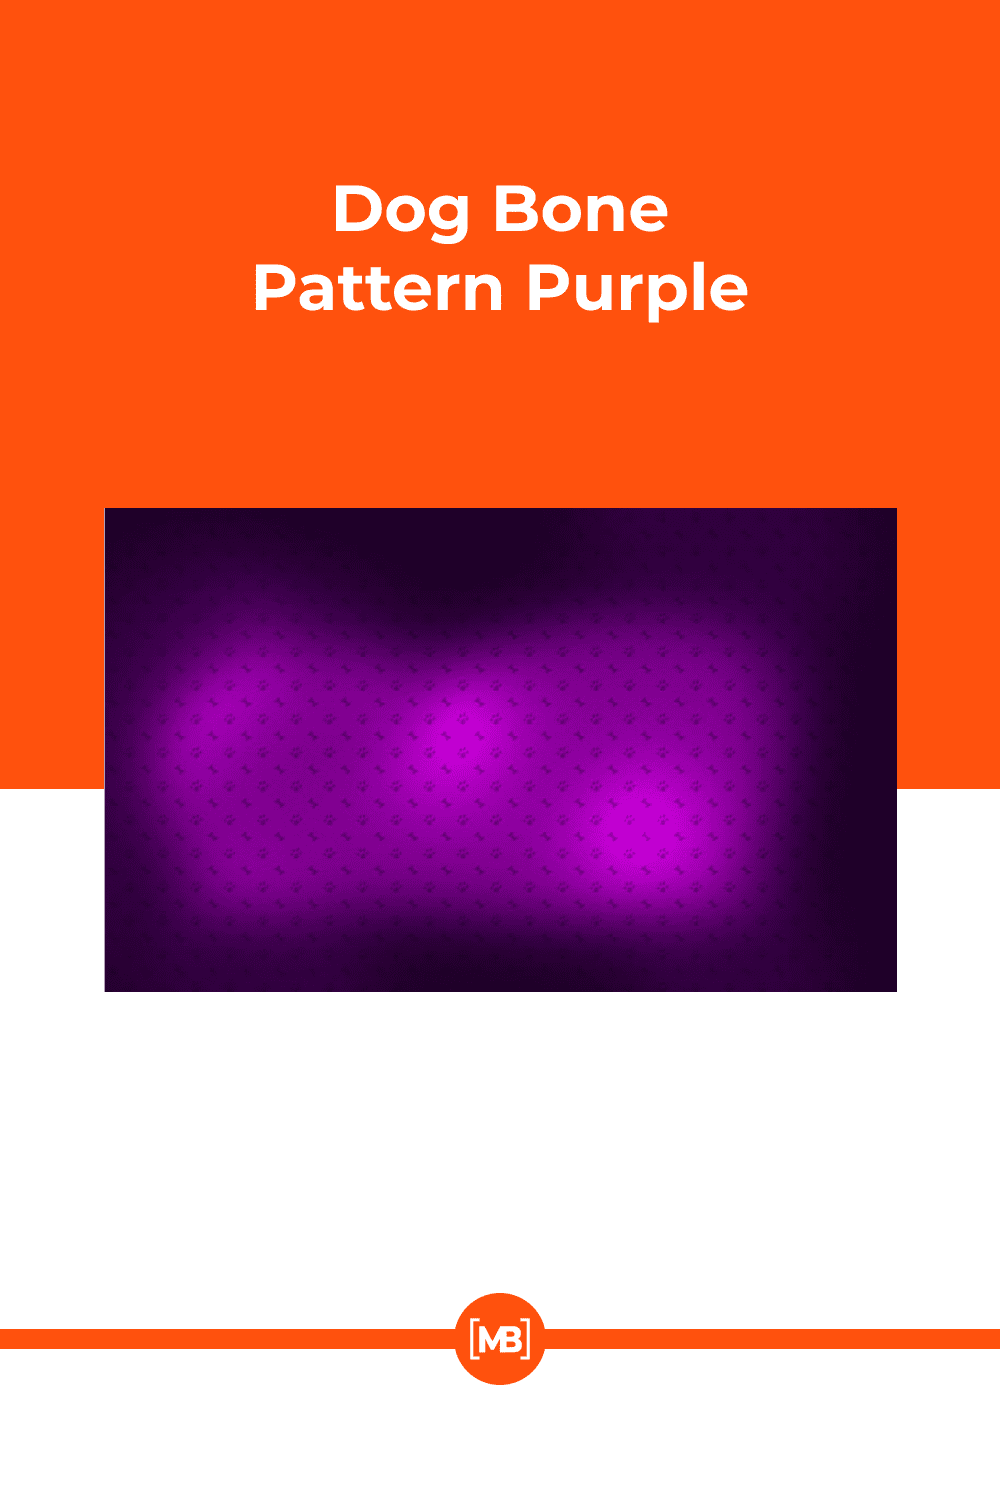 Dog bone pattern purple.